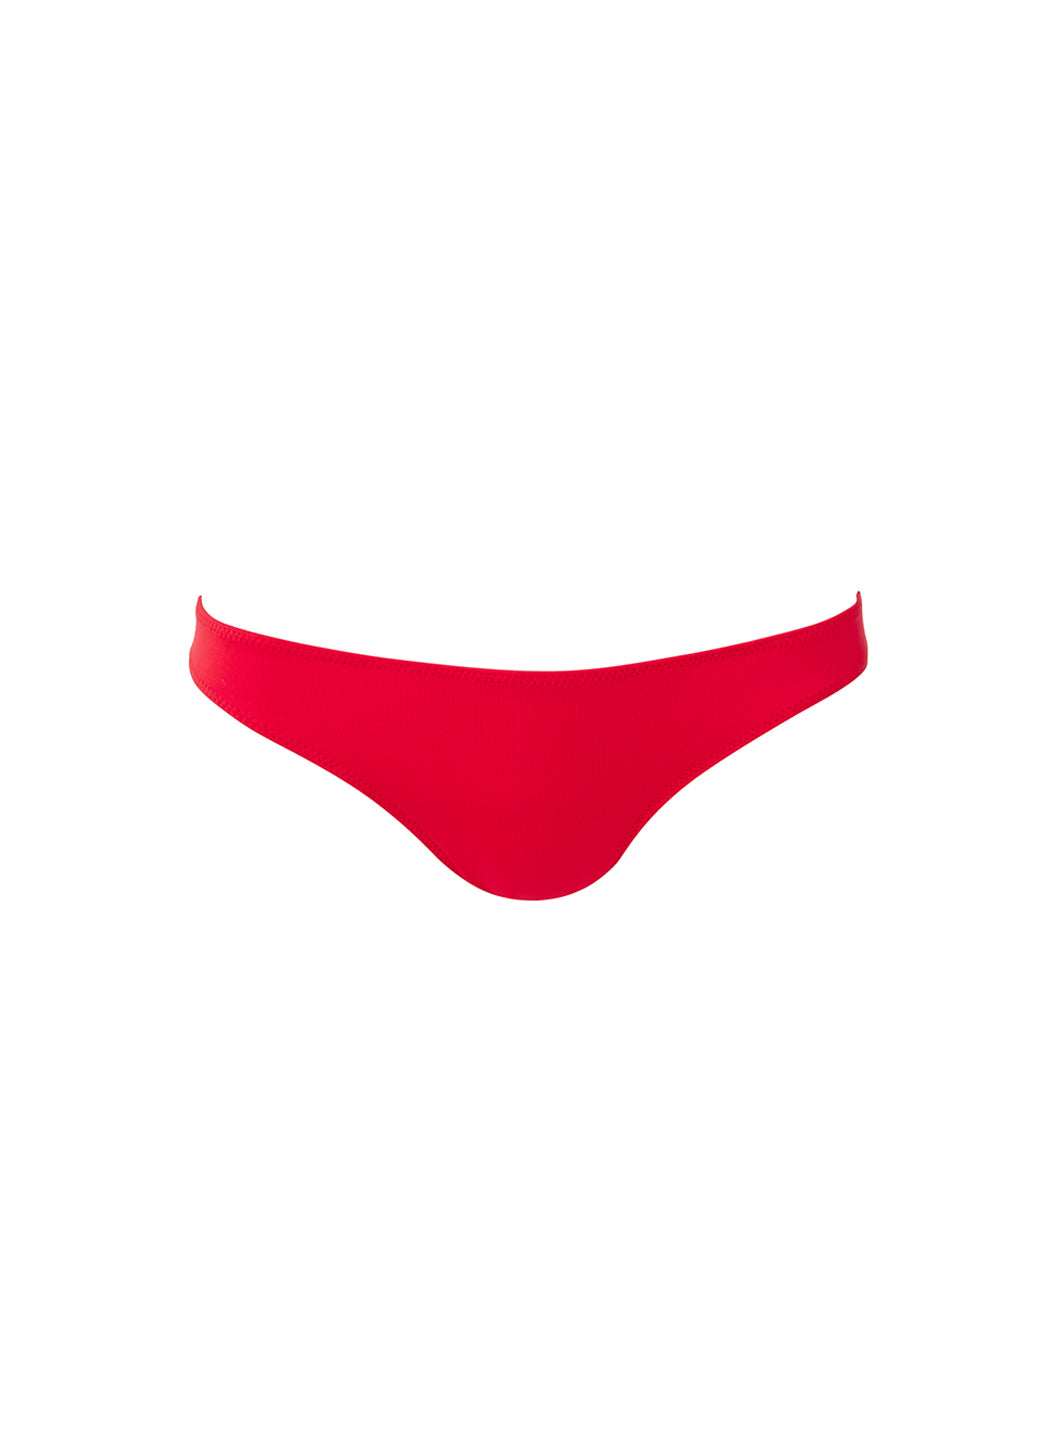 calabria red bikini bottom cutouts 2024